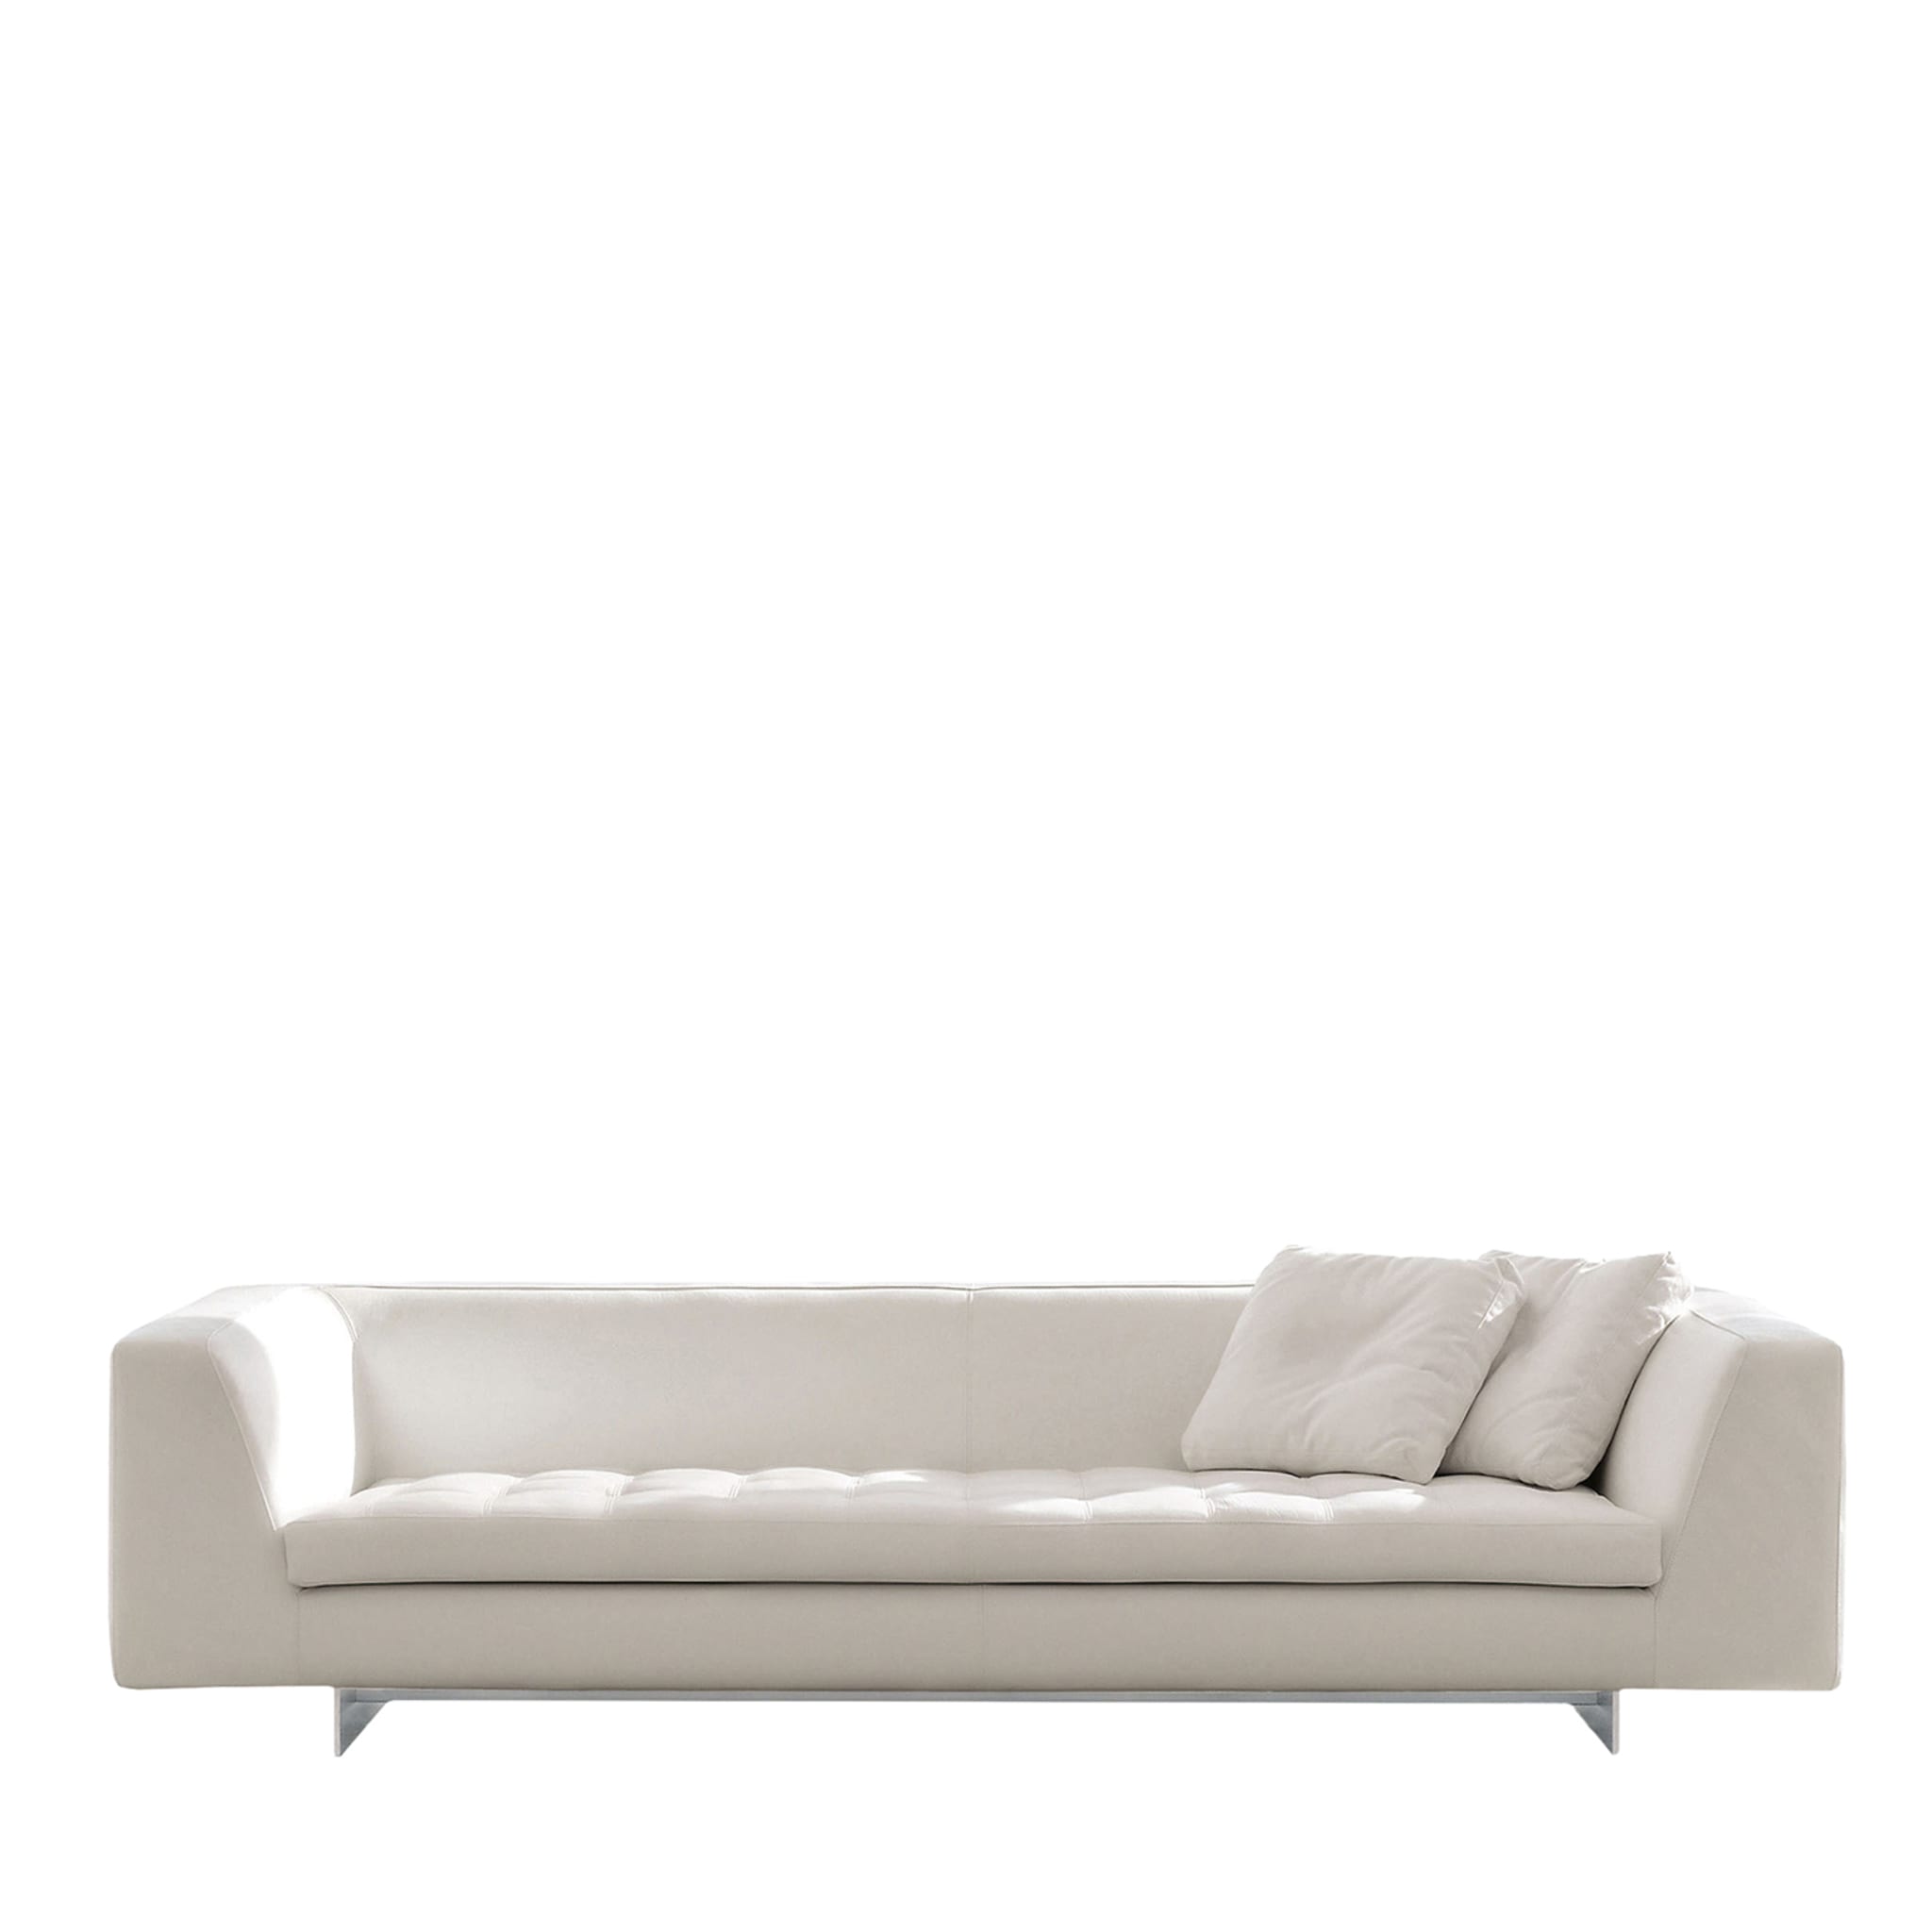 Haero White-Leather Sofa by Giuseppe Bavuso - Main view